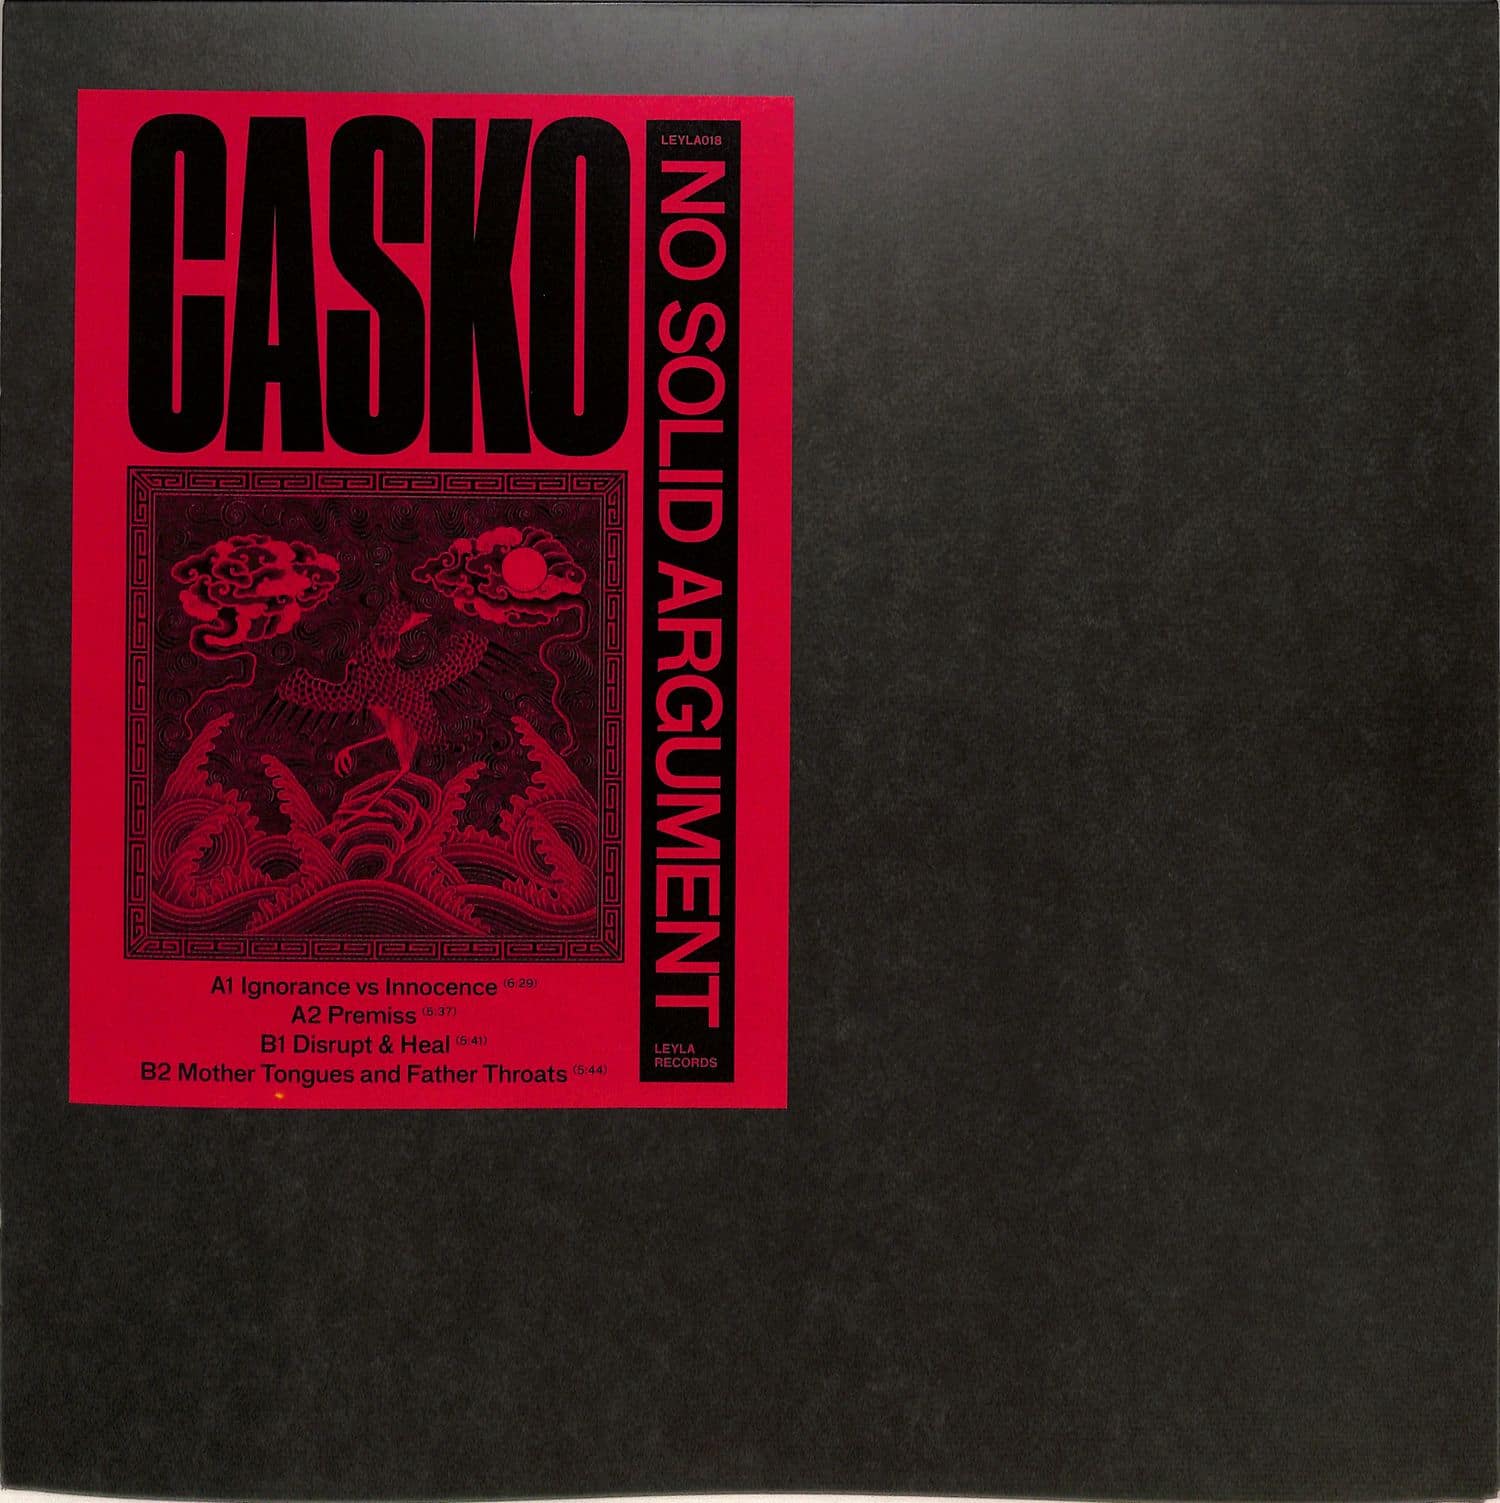 CASKO - NO SOLID ARGUMENT